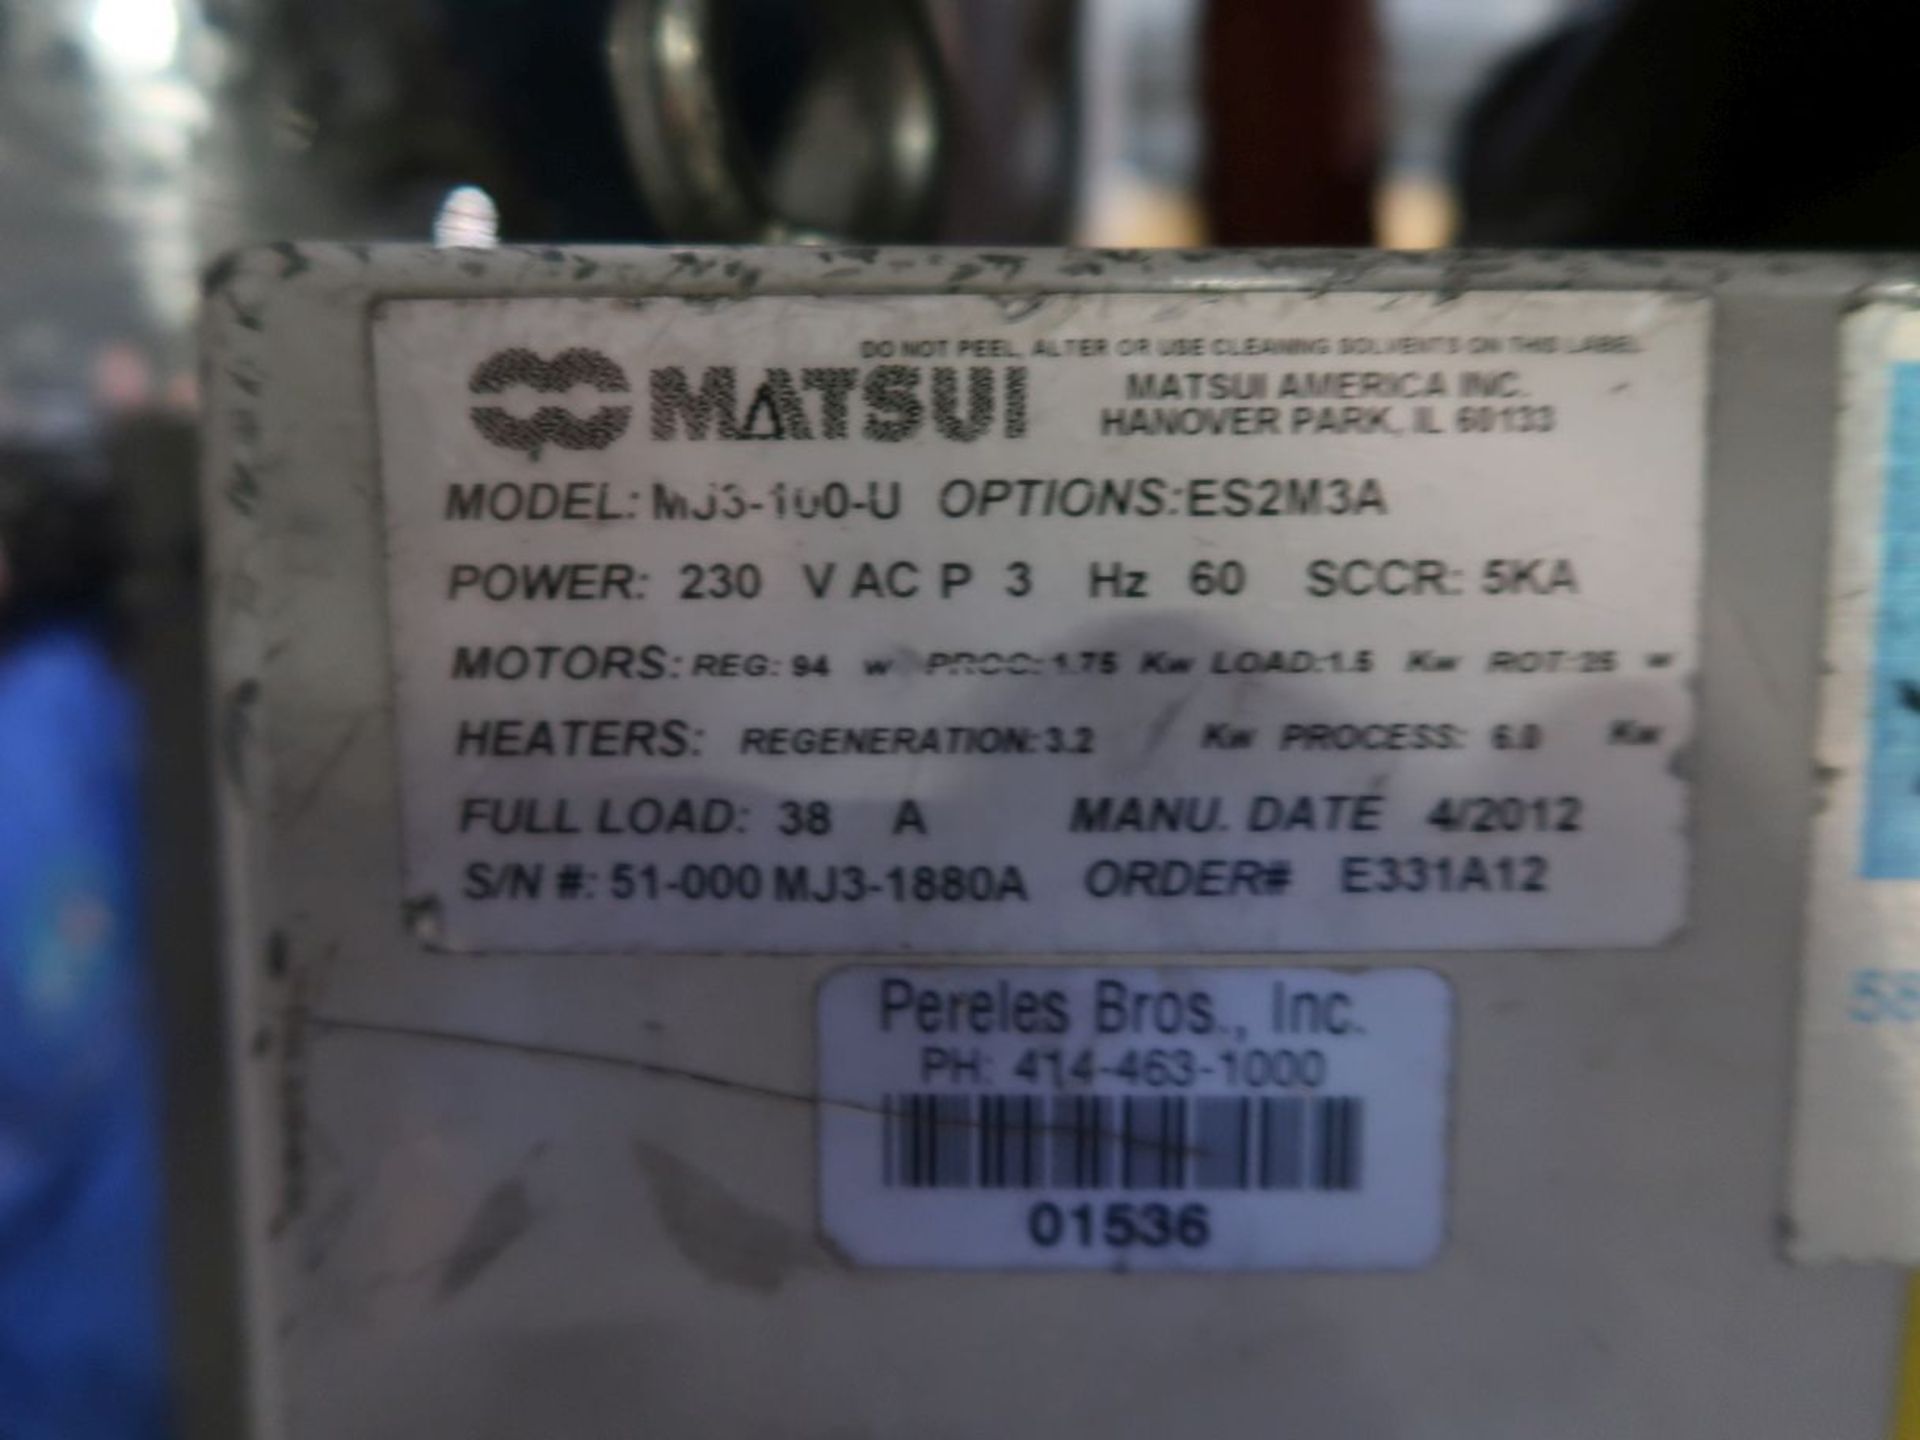 MATSUI MODEL MJ3-100-U DRYER W/ HOPPER; S/N 51-000MJ3-1880A (NEW 2012) - Image 3 of 3